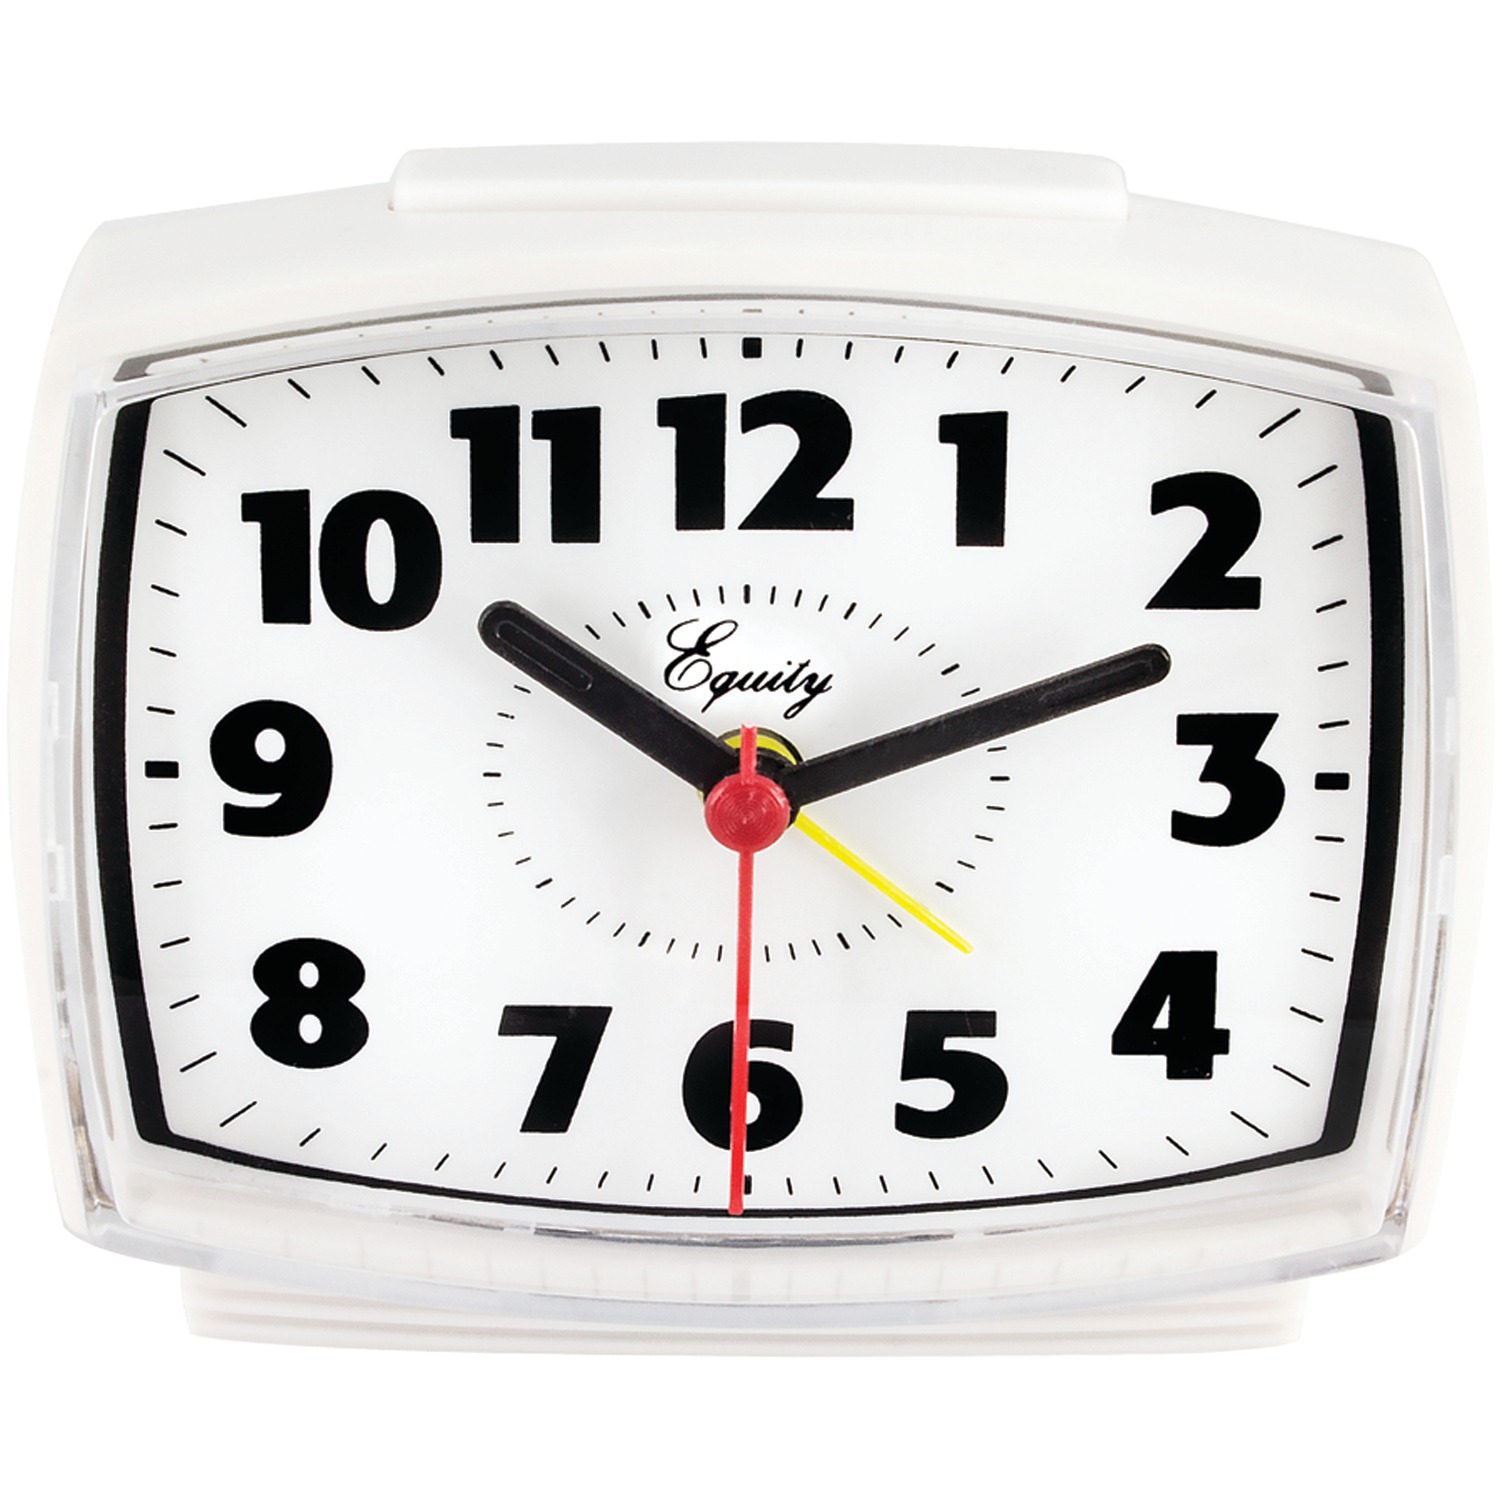 Equity by La Crosse 33100 Electric Analog Alarm Clock - image 1 of 7